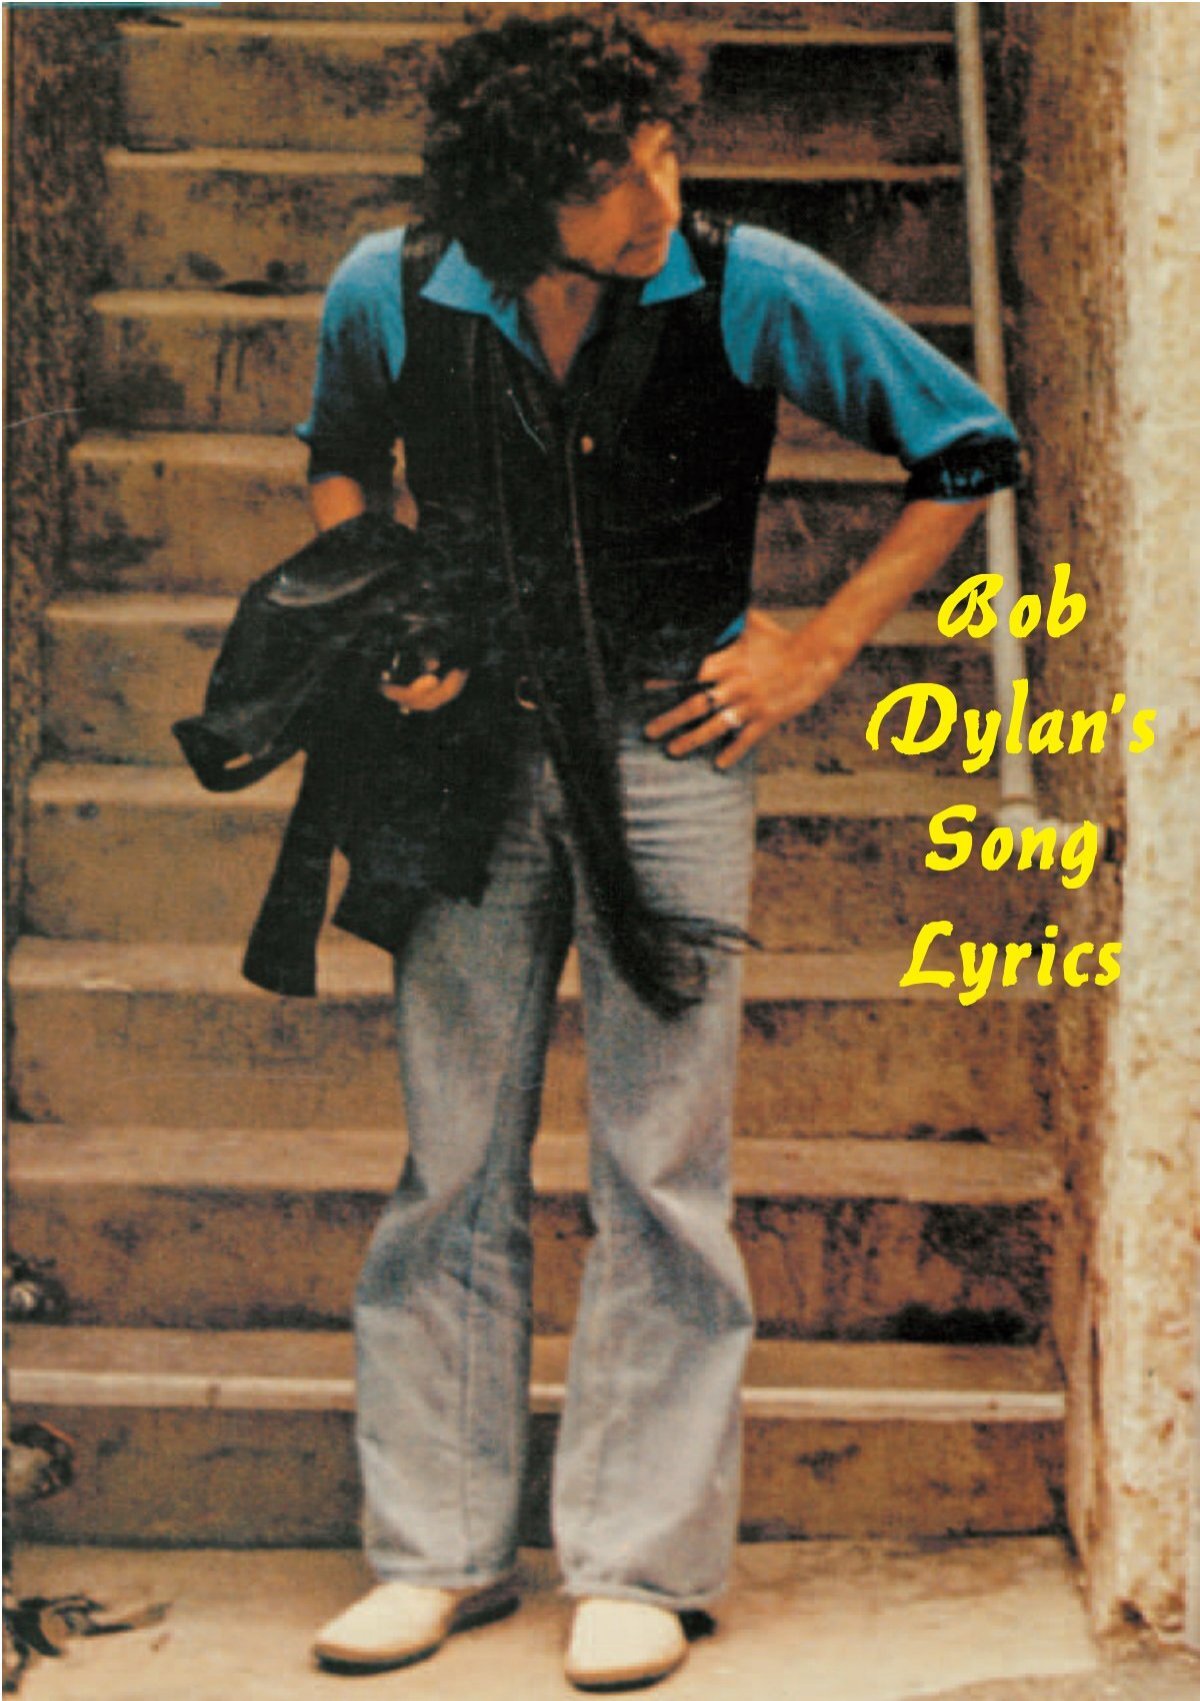 Bob Dylan\'s Song Lyrics - One Net World